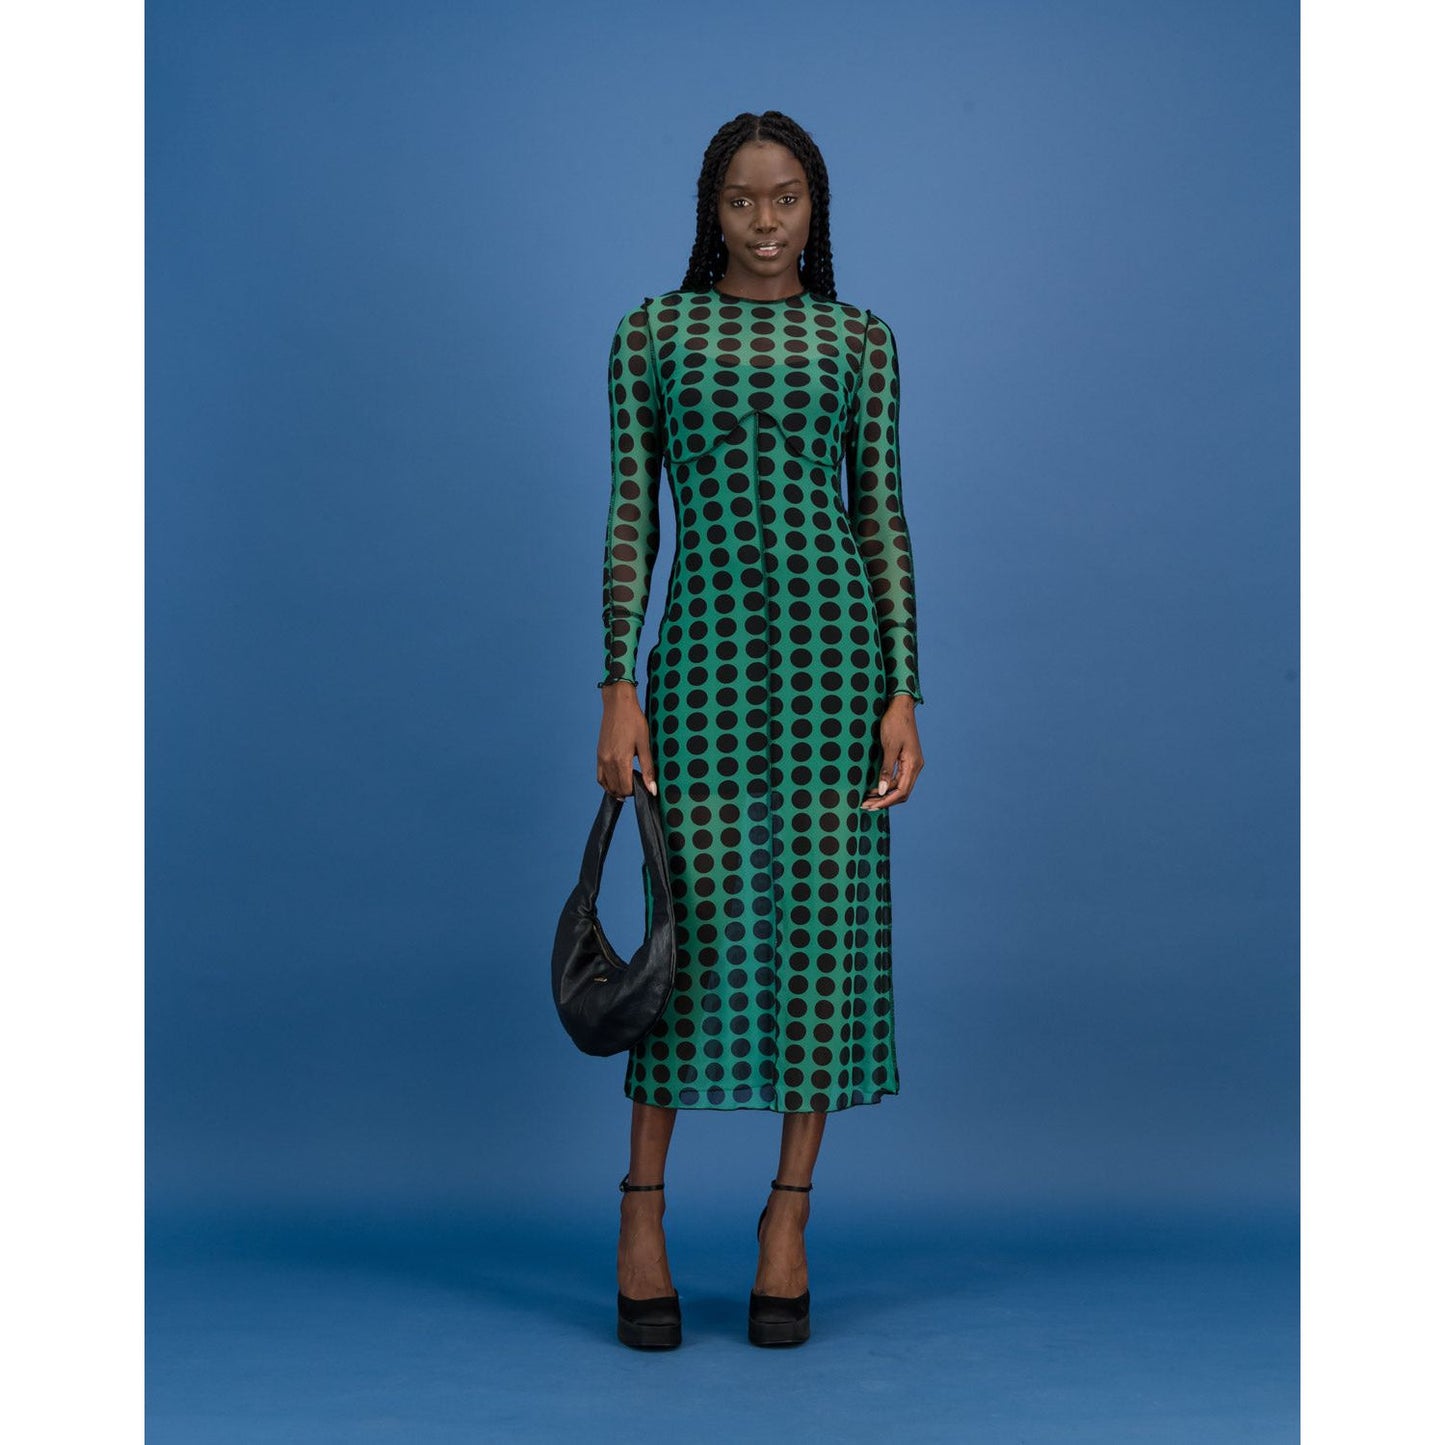 Underbust Cutline Dress & Cami - Green Polka Dot